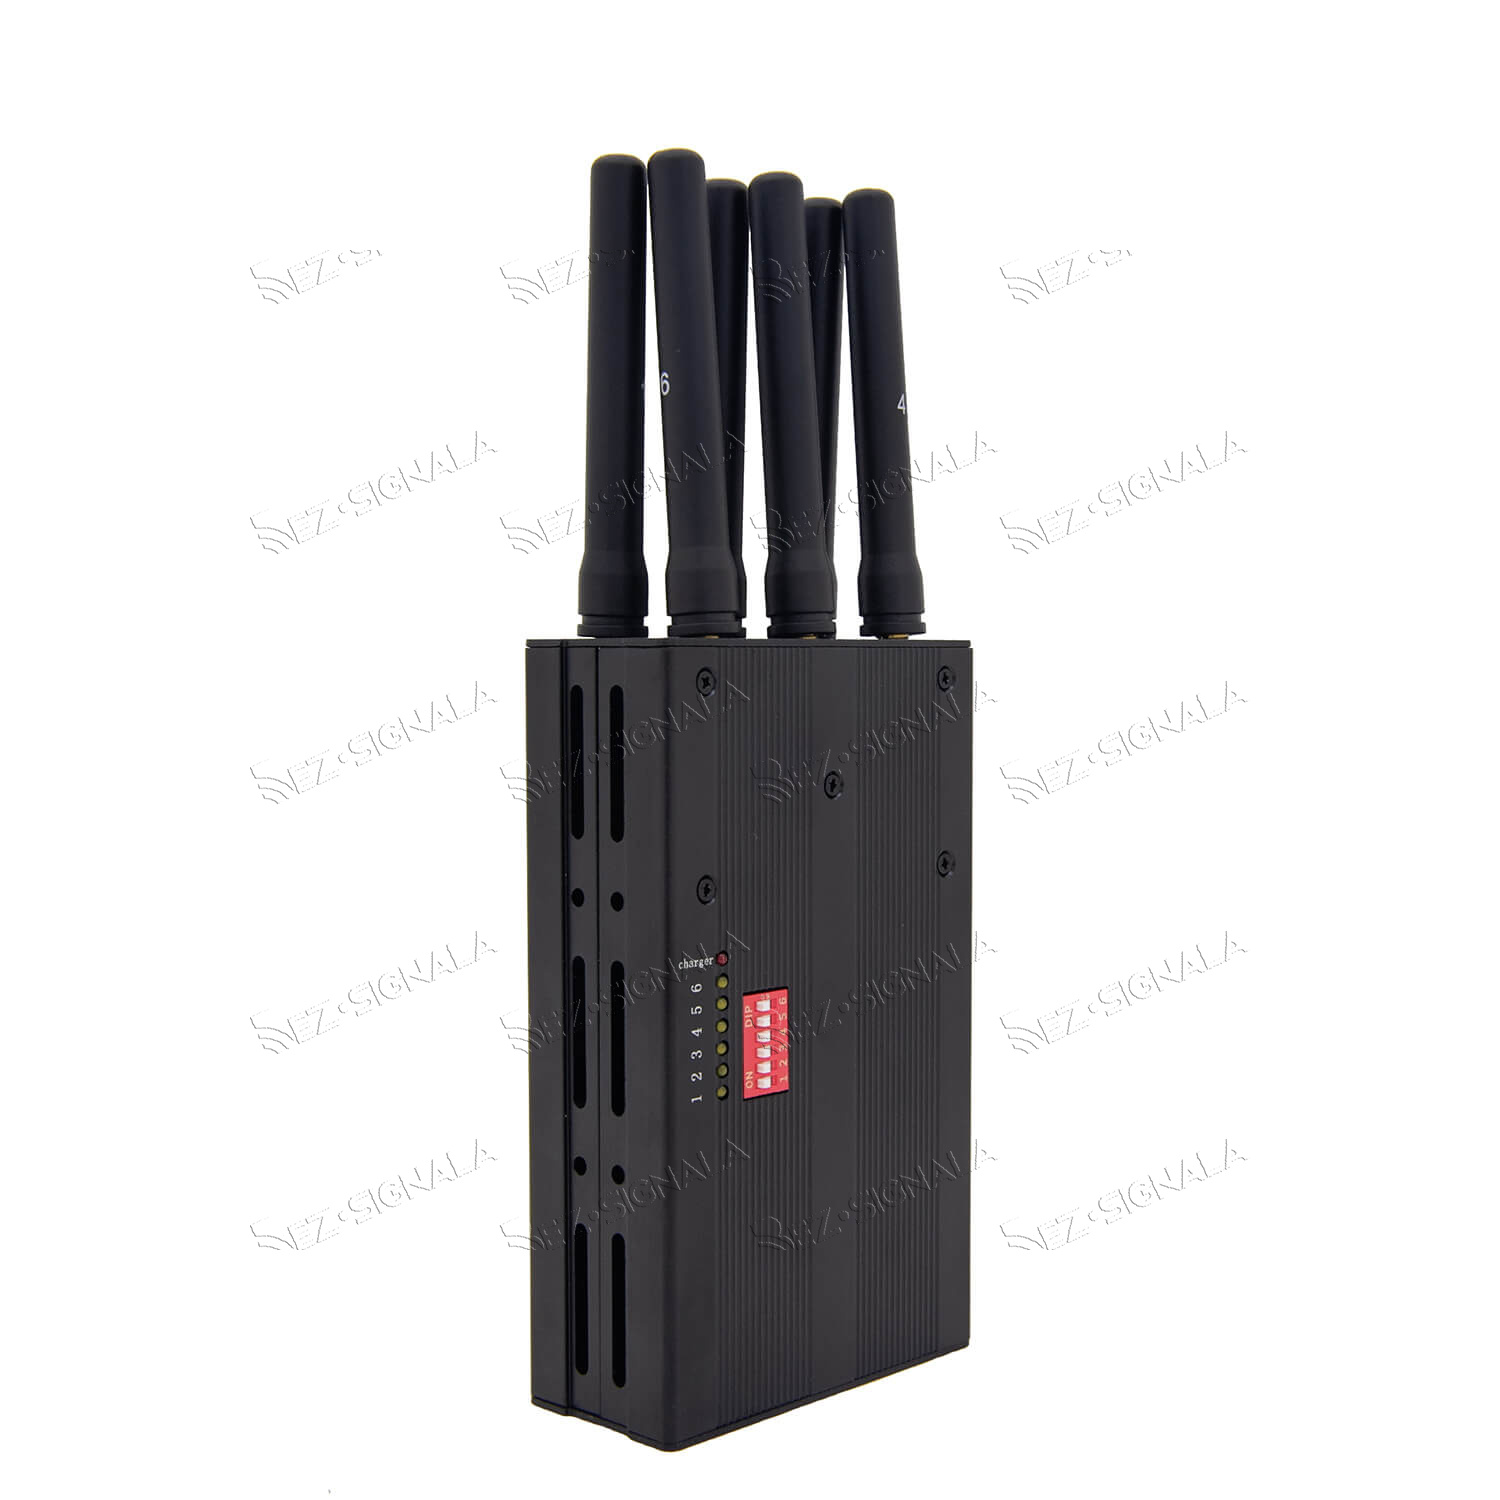 Глушилка EaglePro EP Метель-Z (3G, 4G, WiFi, GSM, DCS/PHS, GPS, Глонасс) (JAX-121A-6) - 2